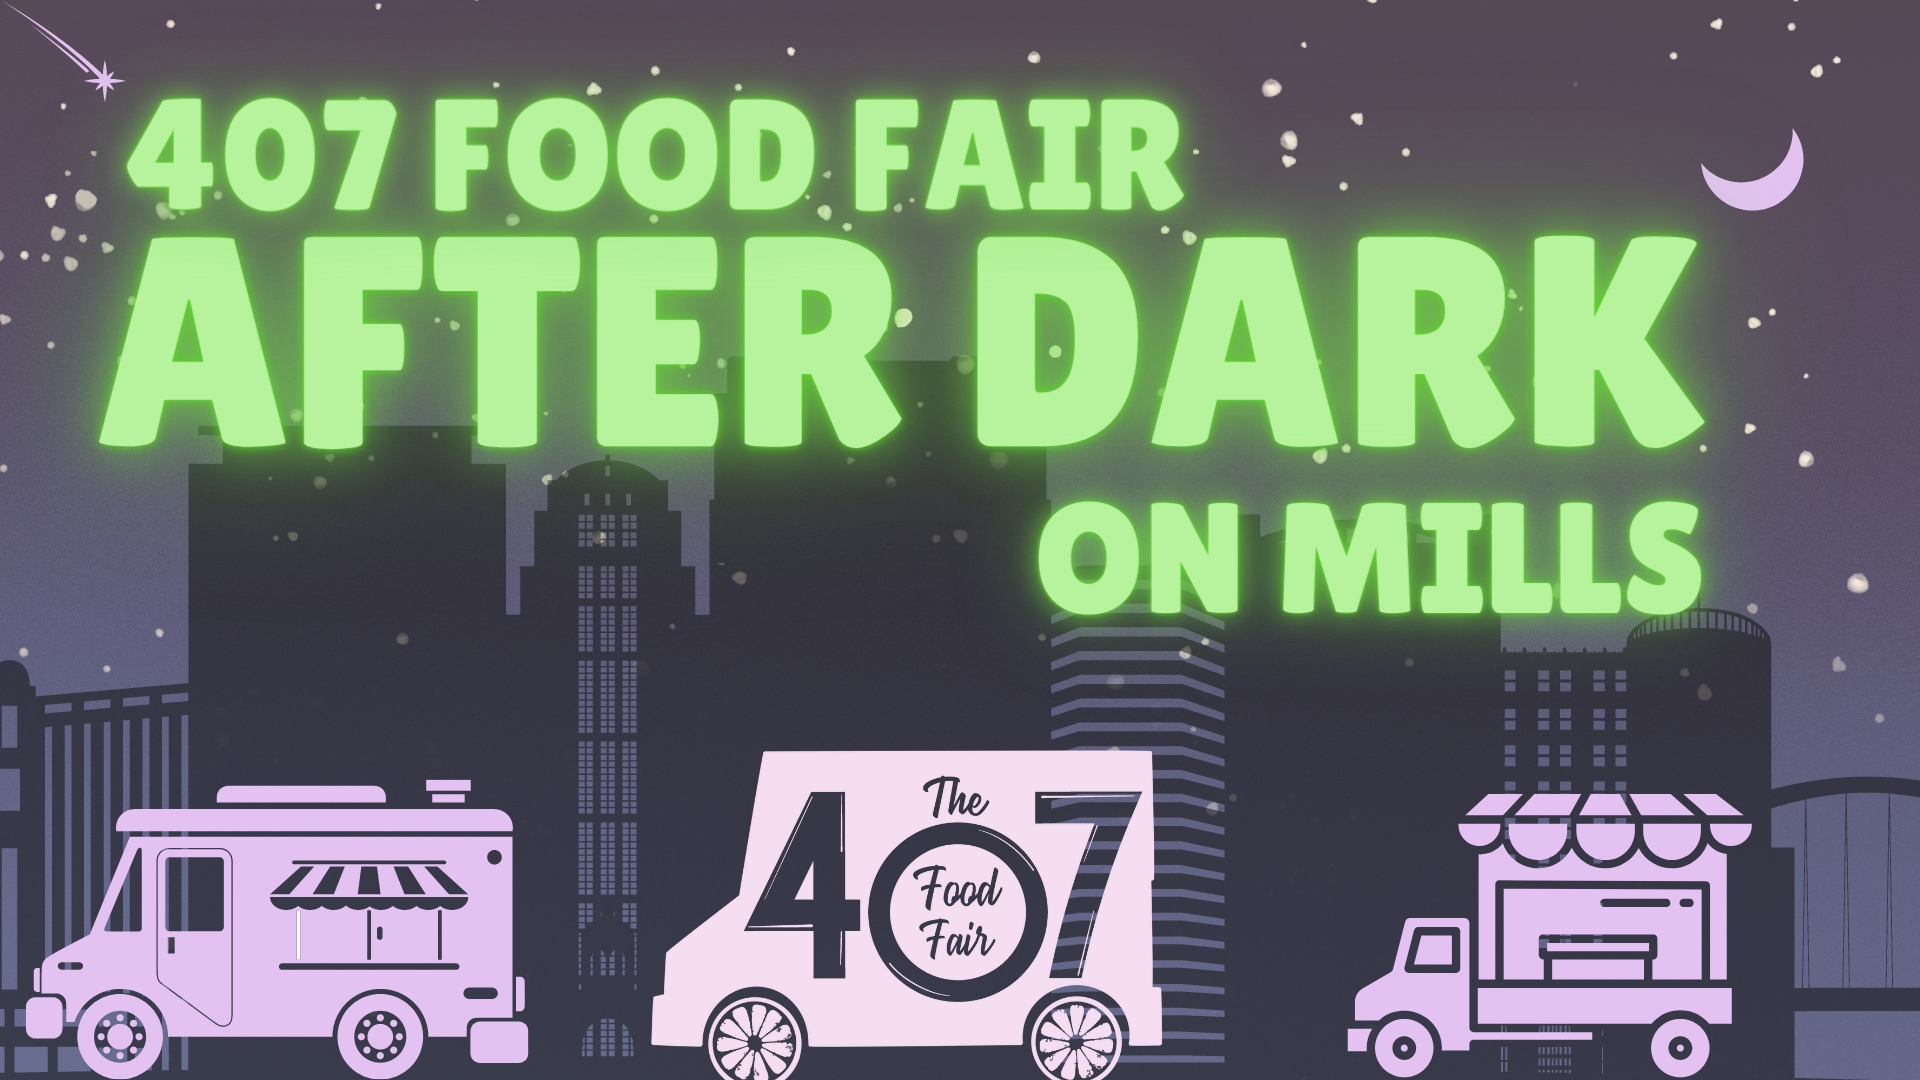 407 Food Fair: After Dark